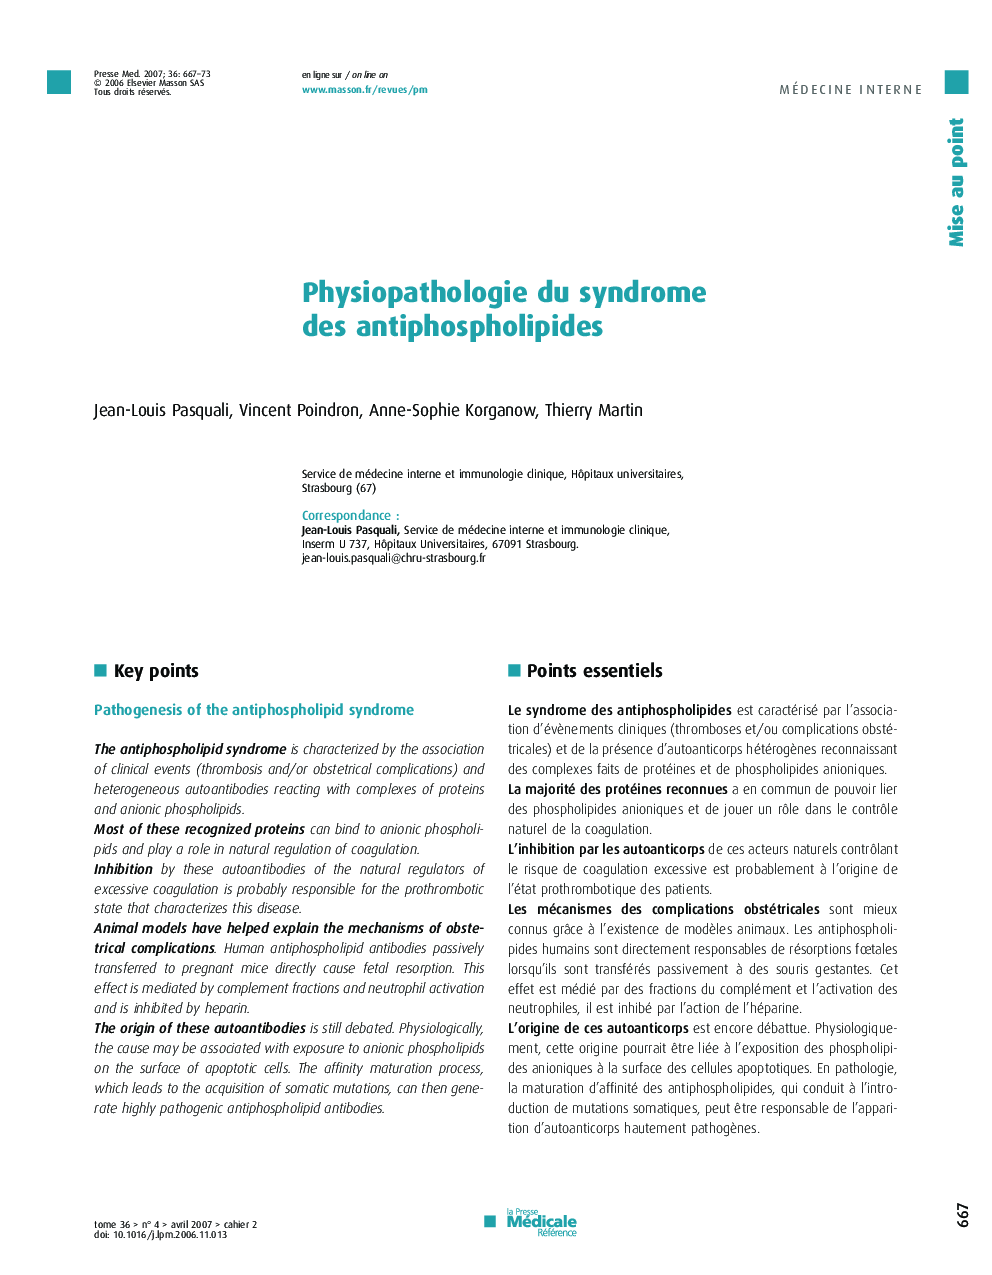 Physiopathologie du syndrome des antiphospholipides